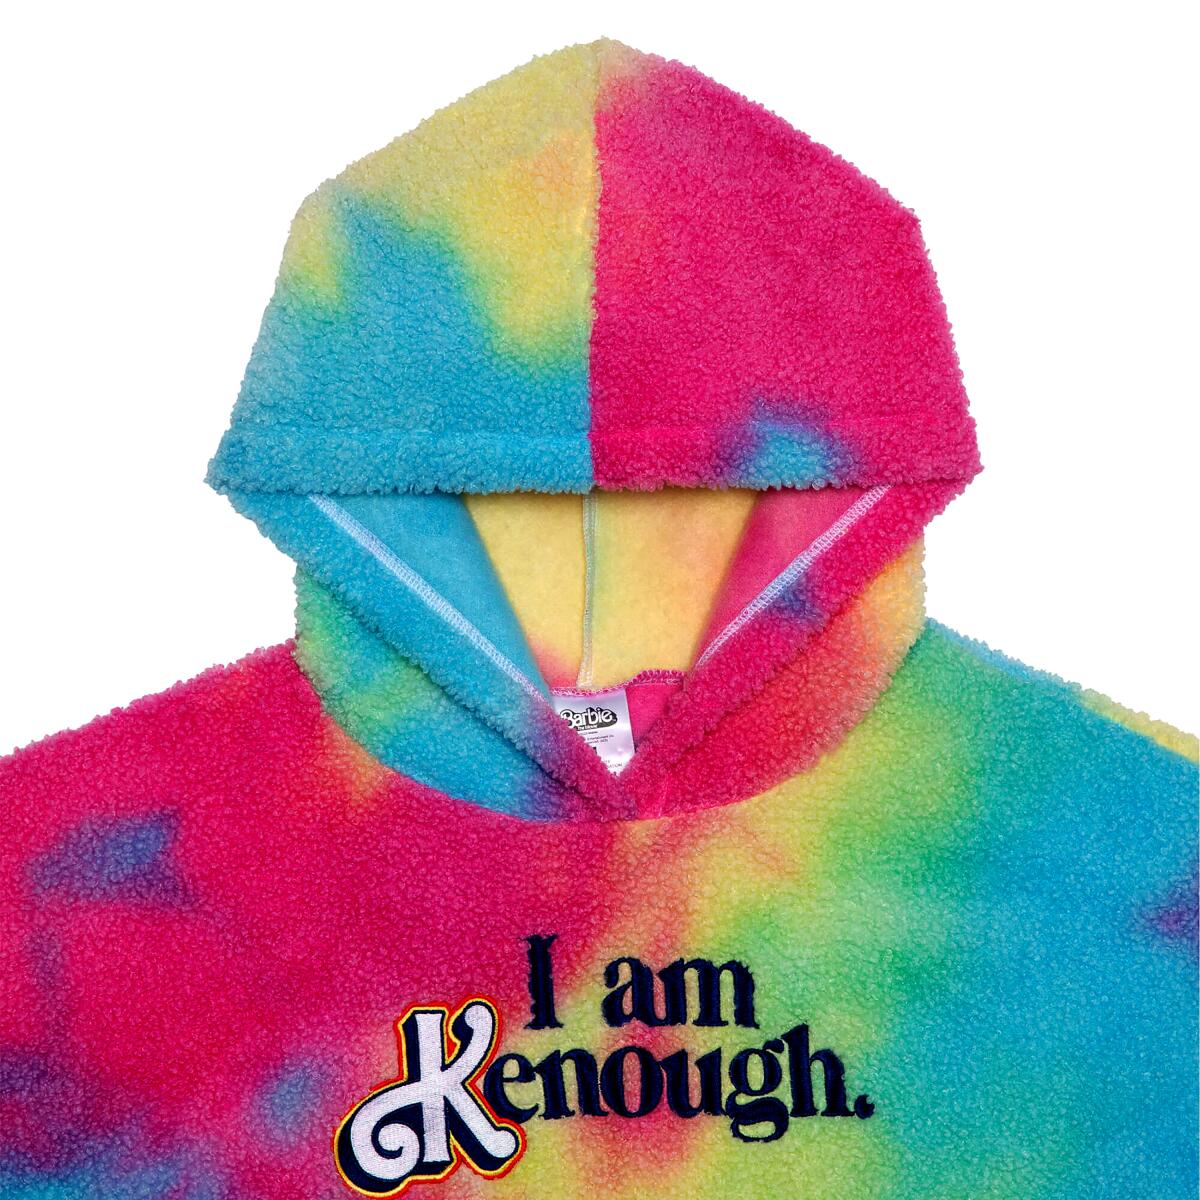 A tie-dye hoodie proclaims "I am Kenough." 